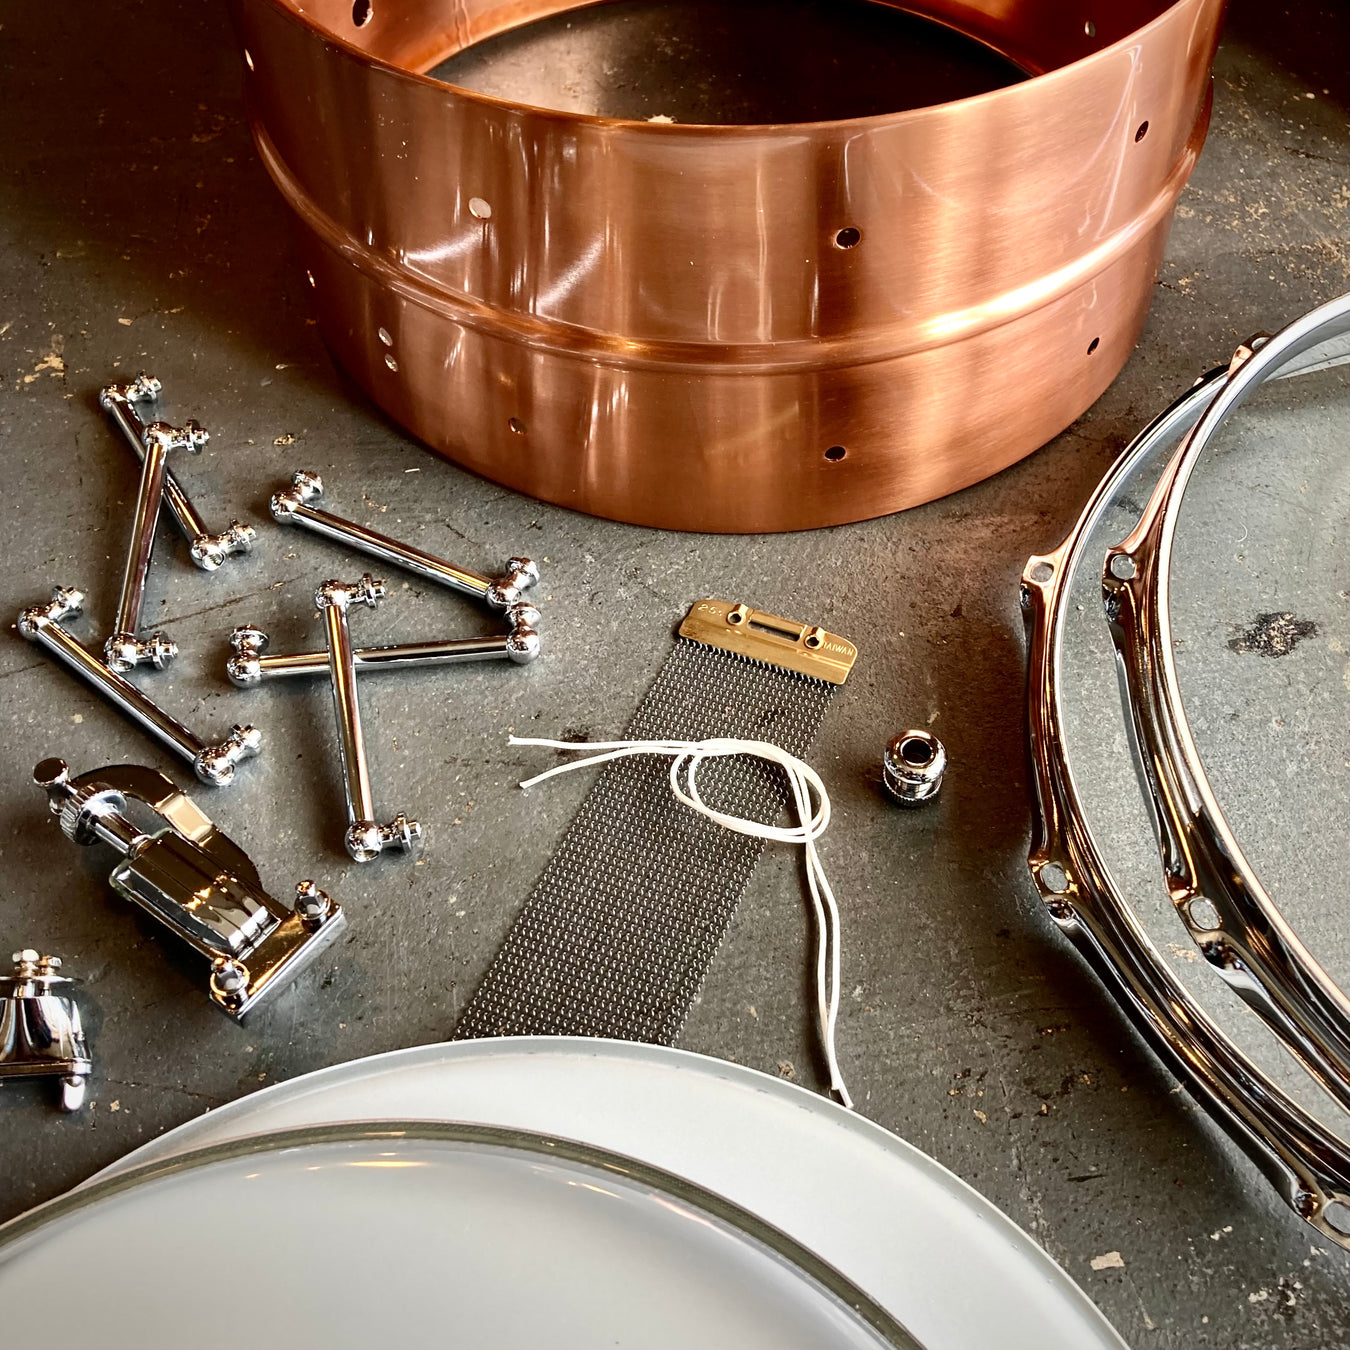 DIY Snare Drum Kits